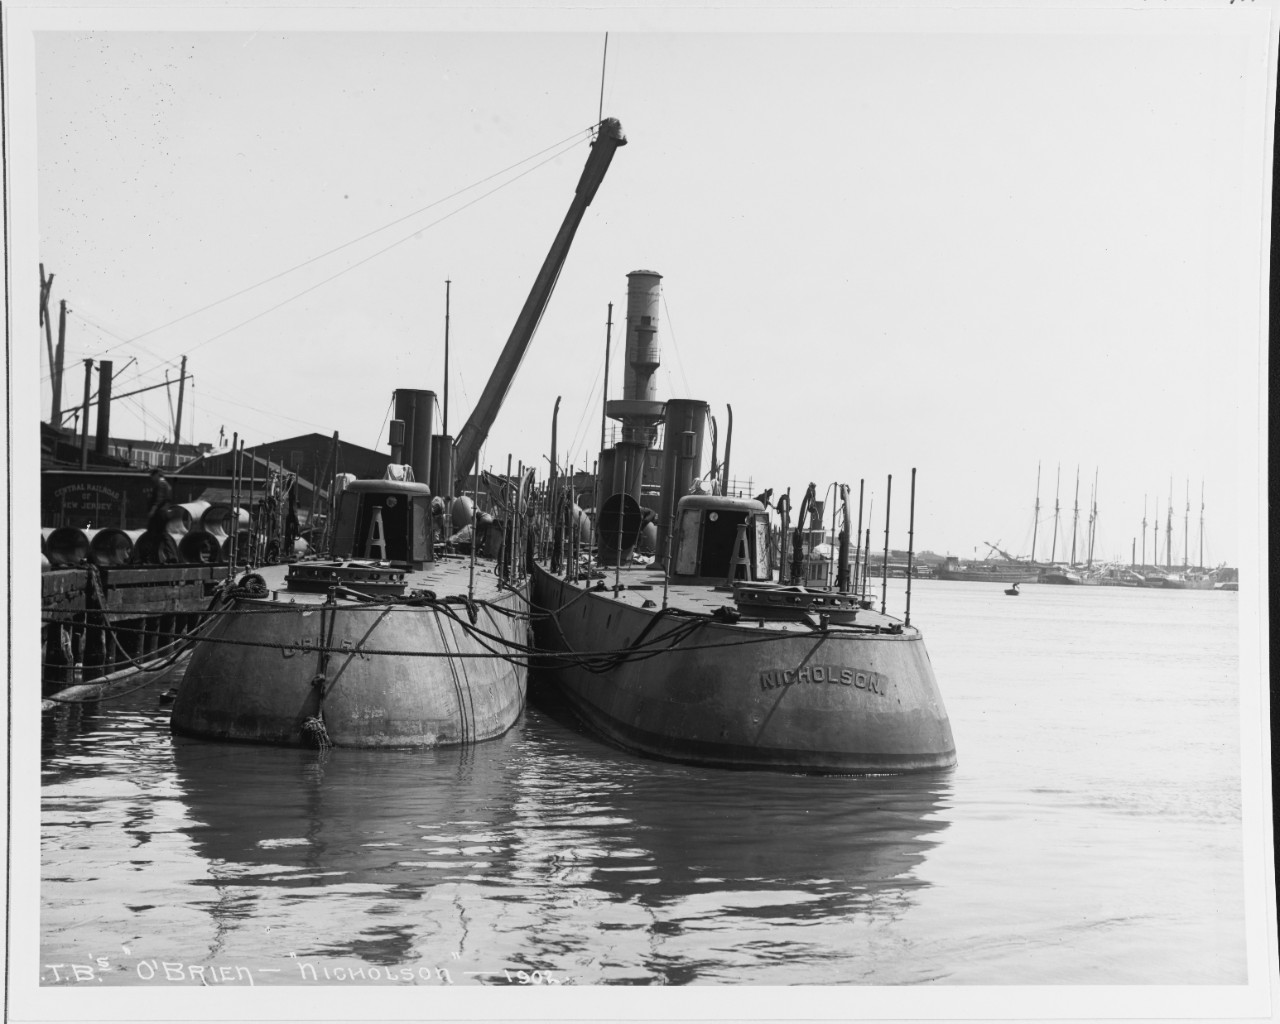 USS O'BRIEN (TB-30) and USS NICHOLSON (TB-29) in 1902.